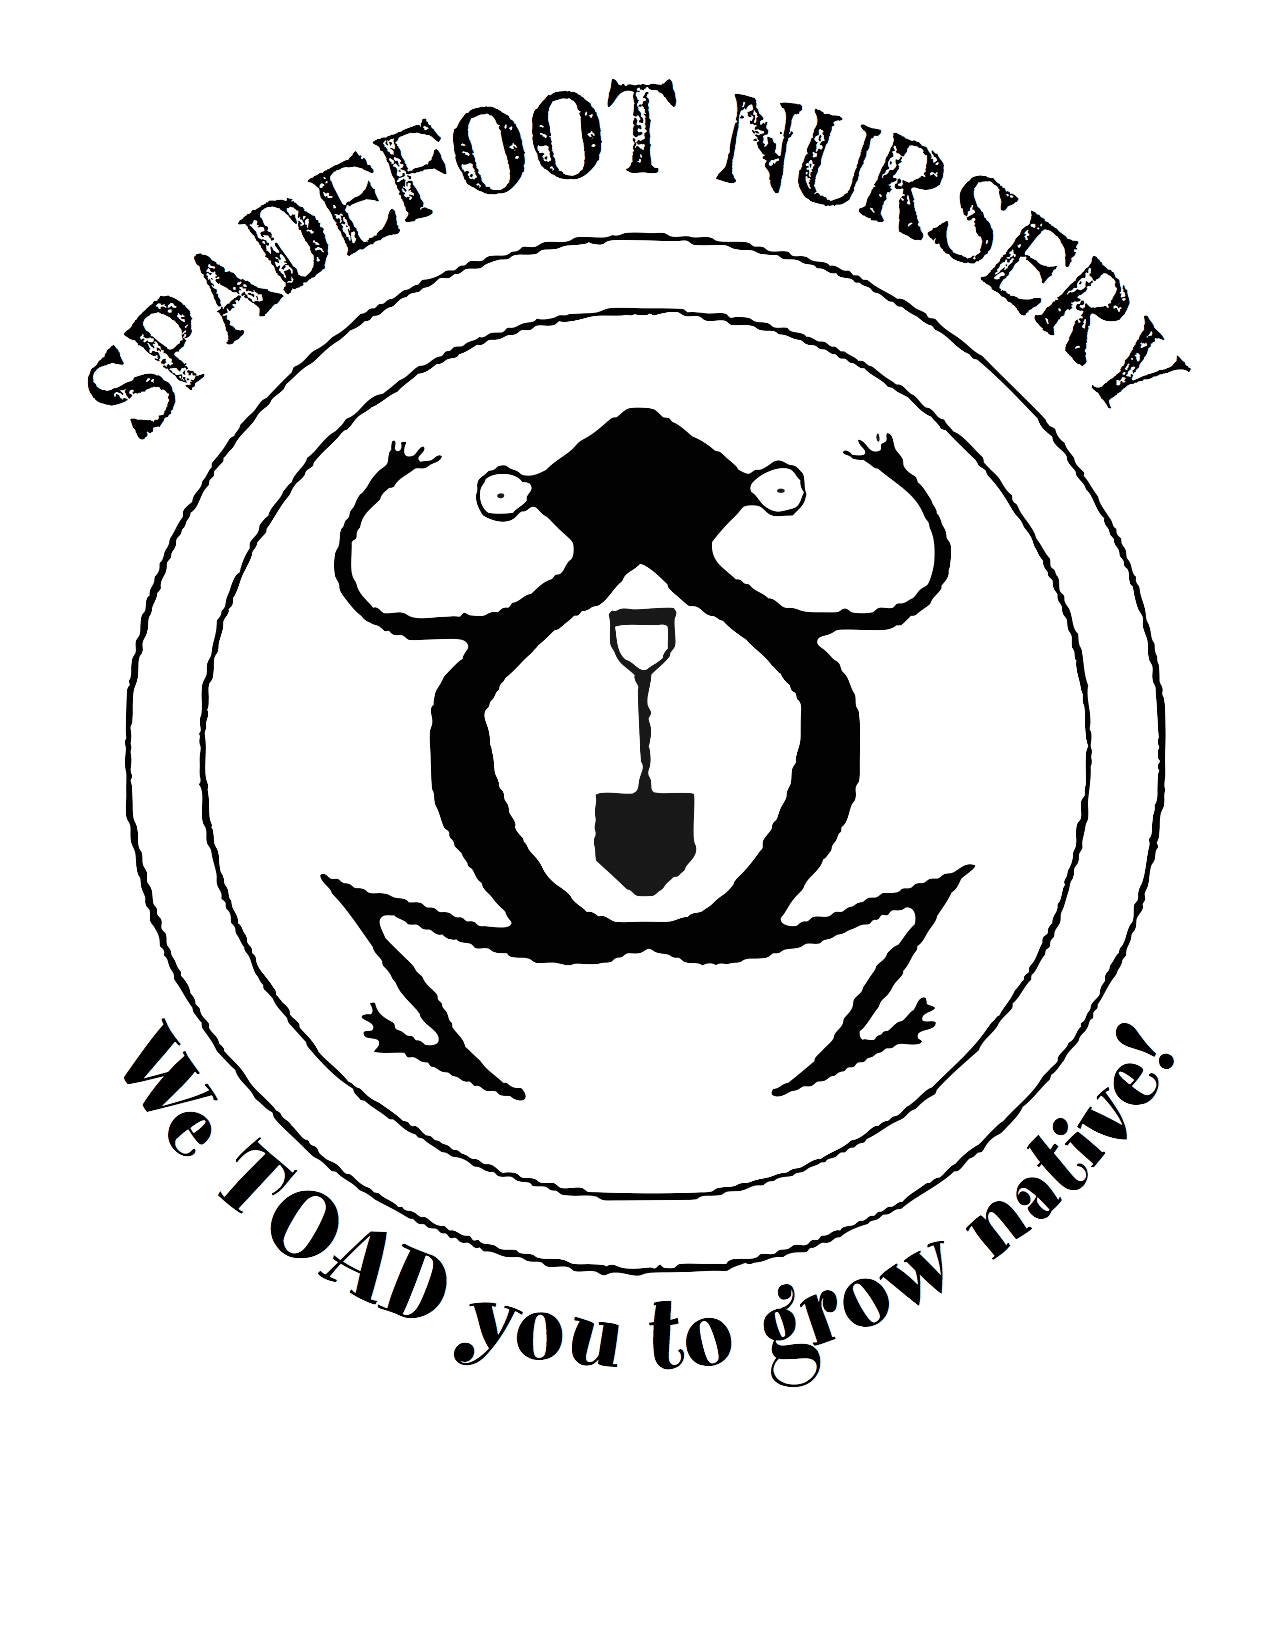 Company logo of Spadefoot Nursery